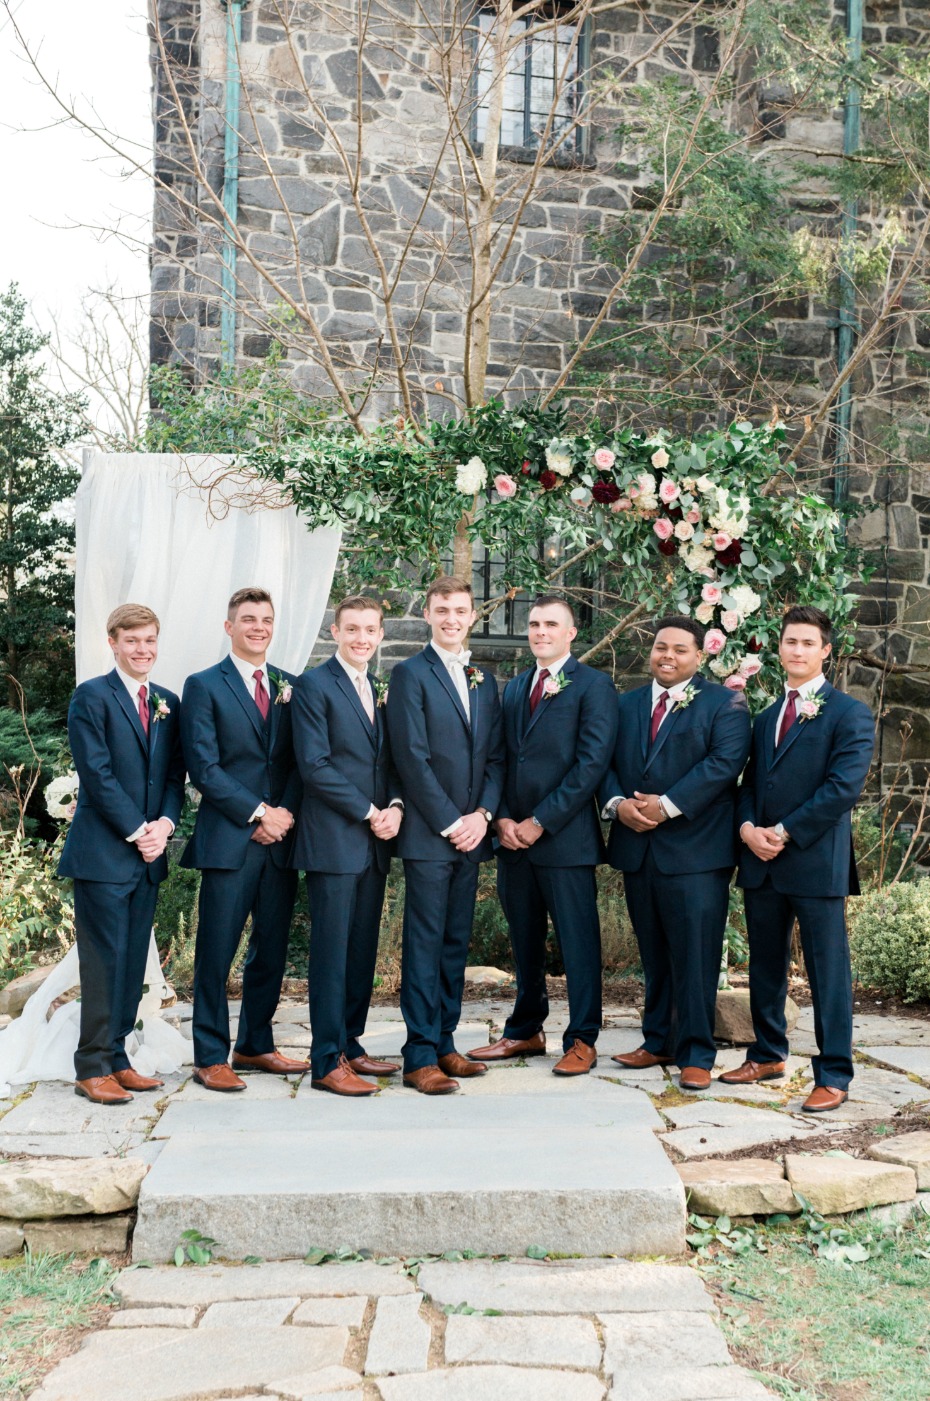 groom and his groomsmen in navy suits